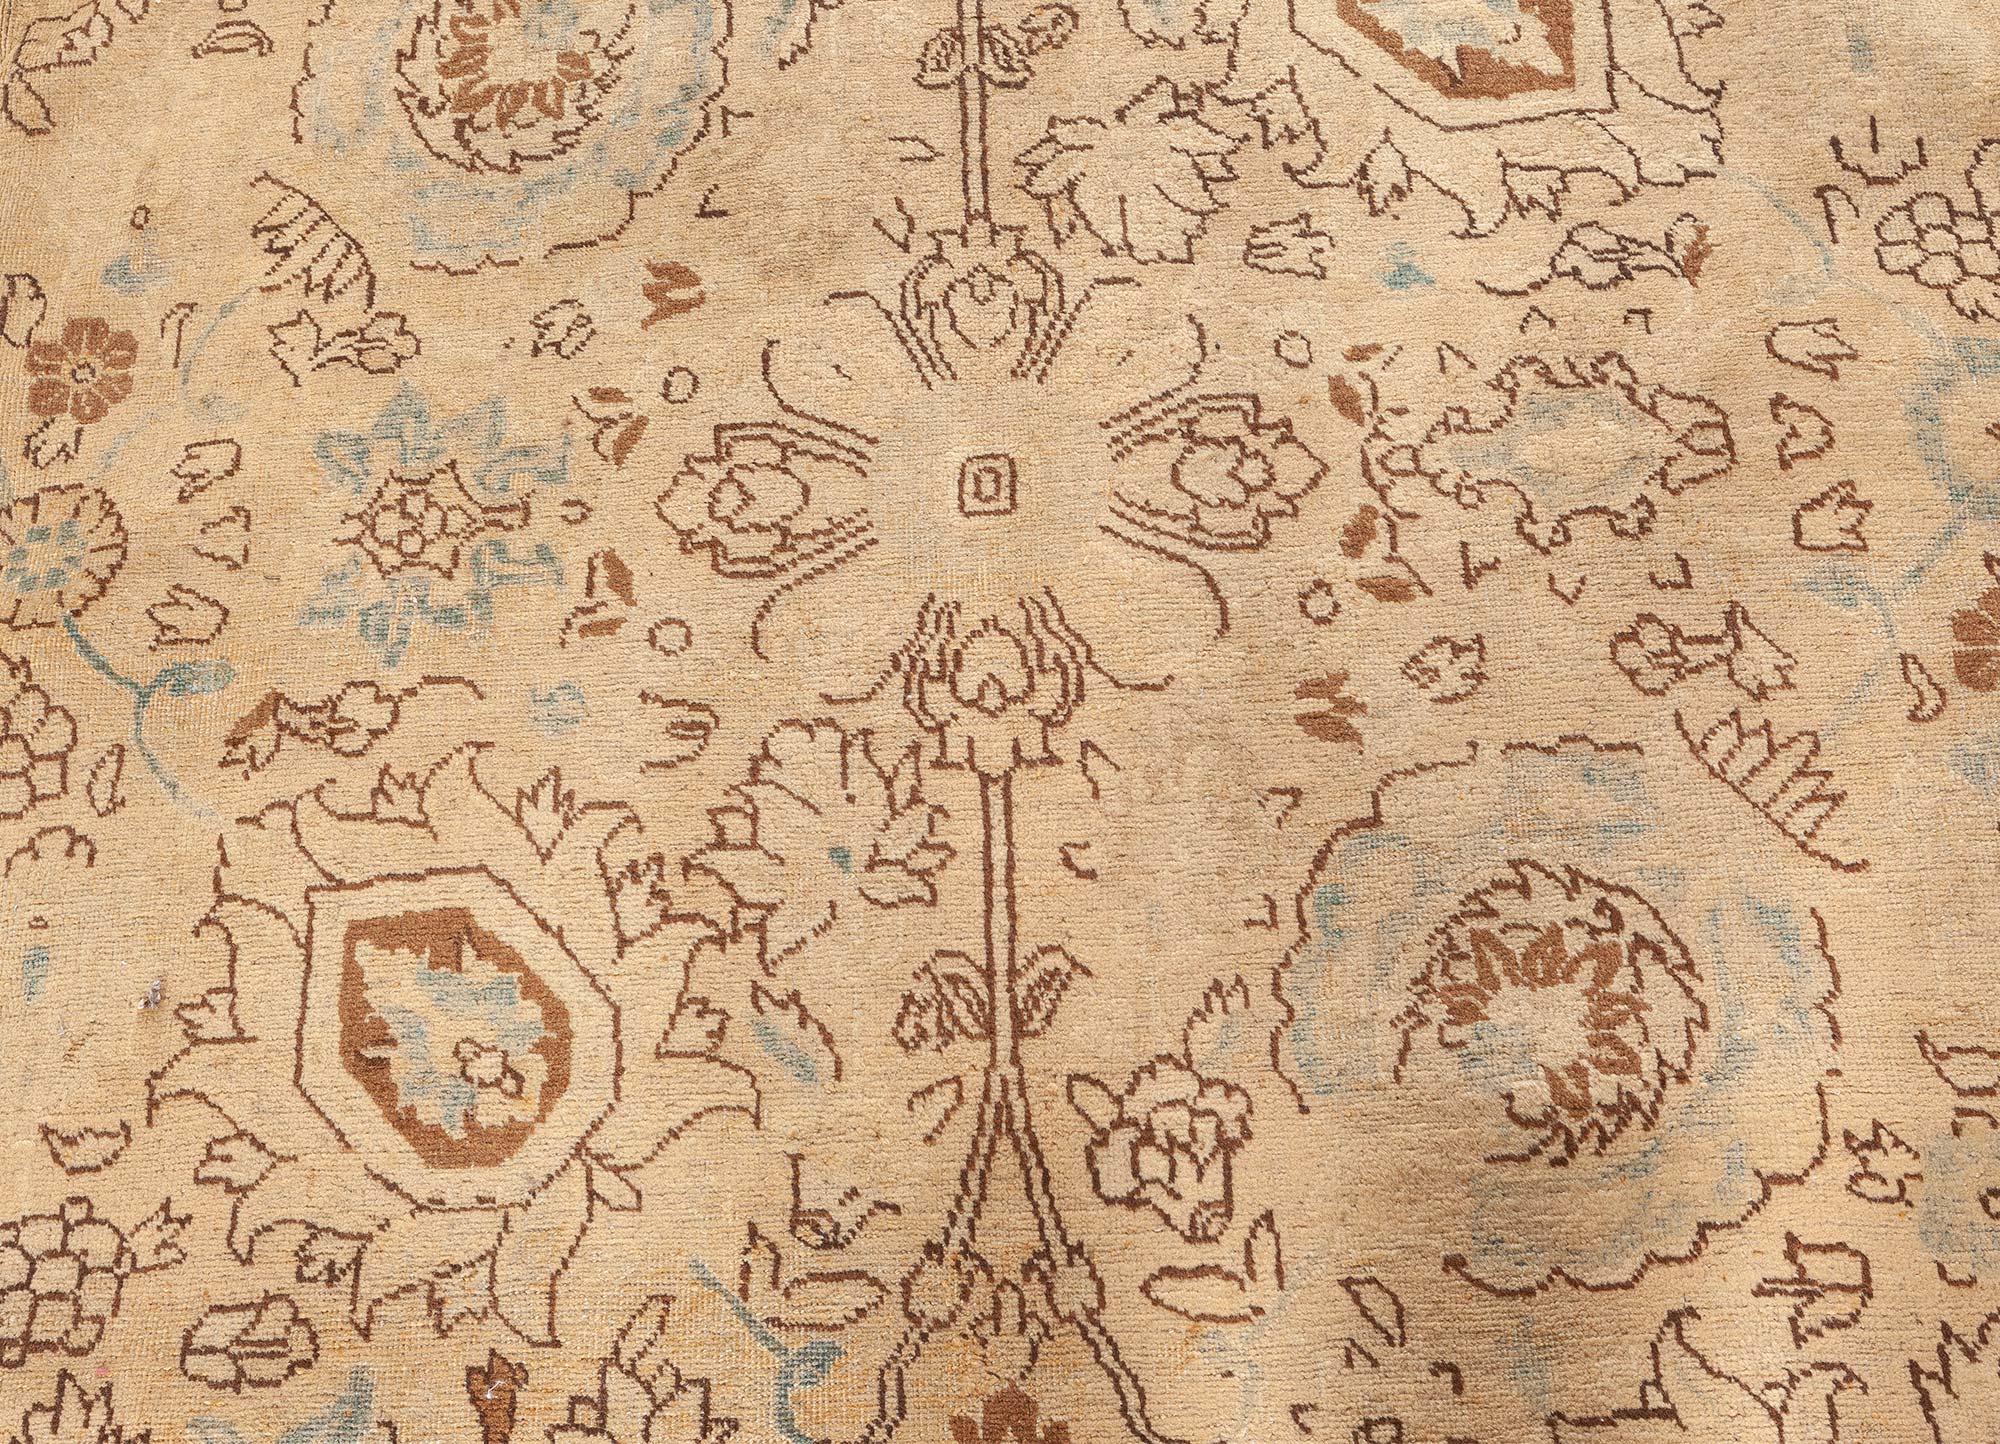 Authentic Early 20th century Tabriz botanic handmade wool rug
Size: 11'6